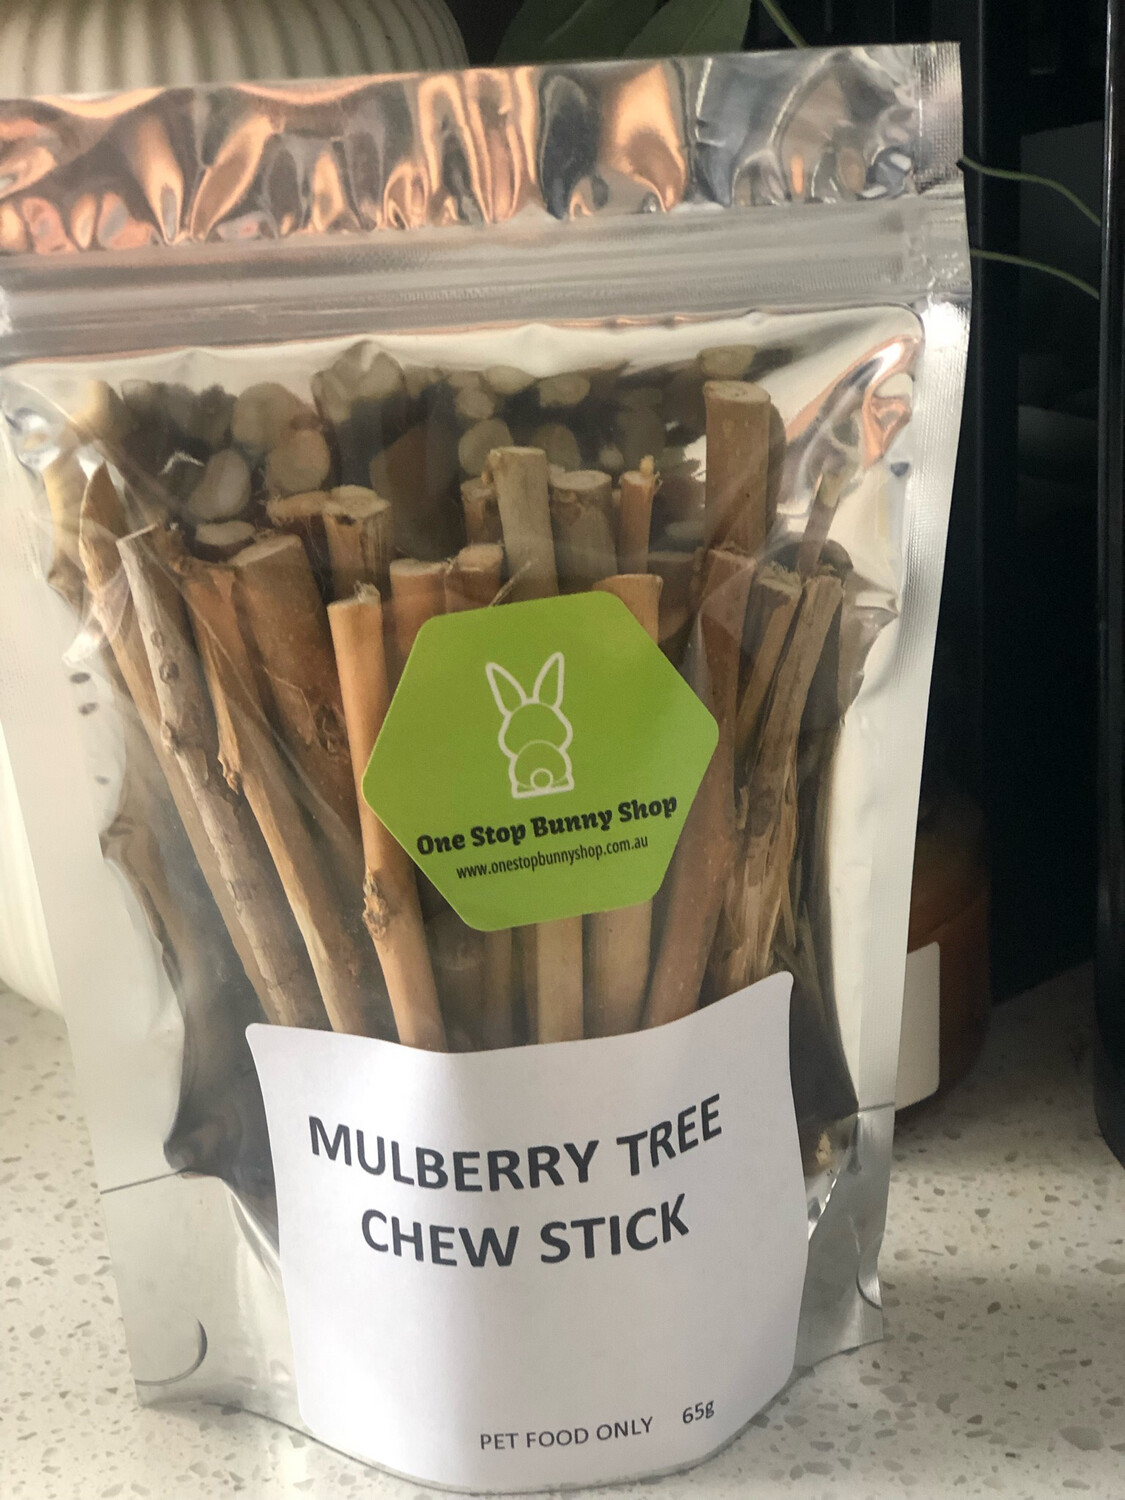 Mulberry tree chew stick 65g